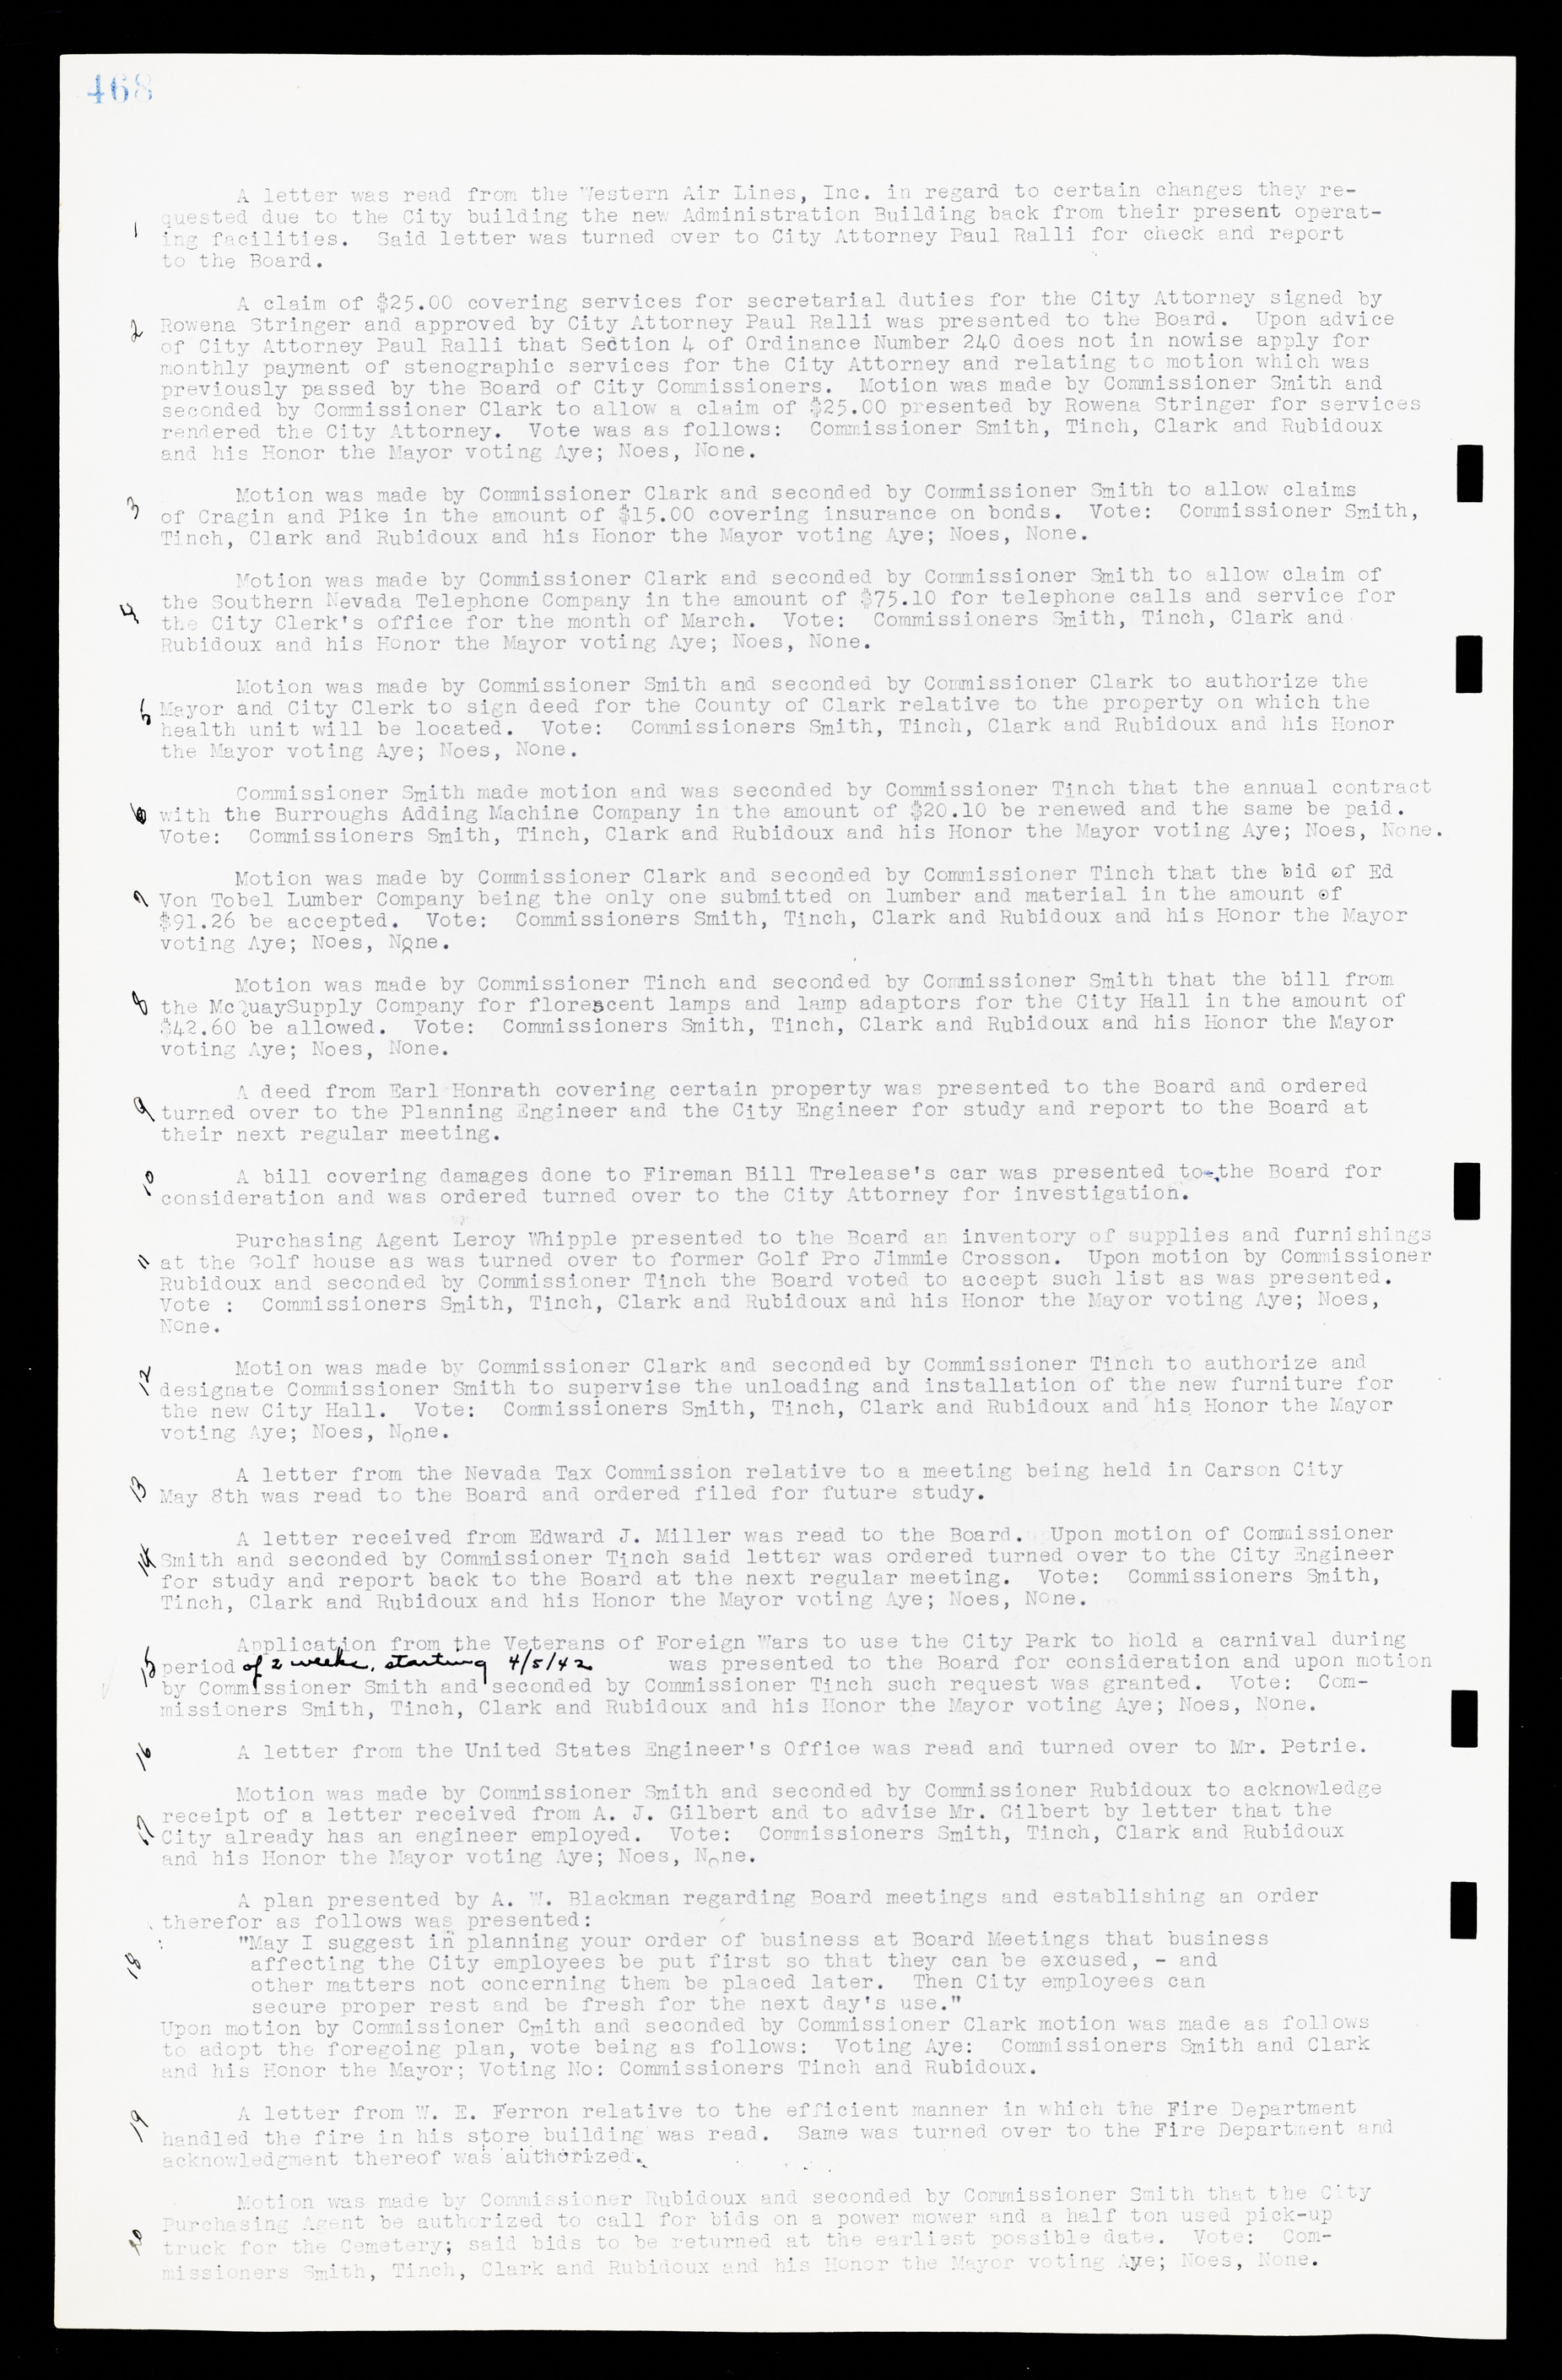 Las Vegas City Commission Minutes, February 17, 1937 to August 4, 1942, lvc000004-496